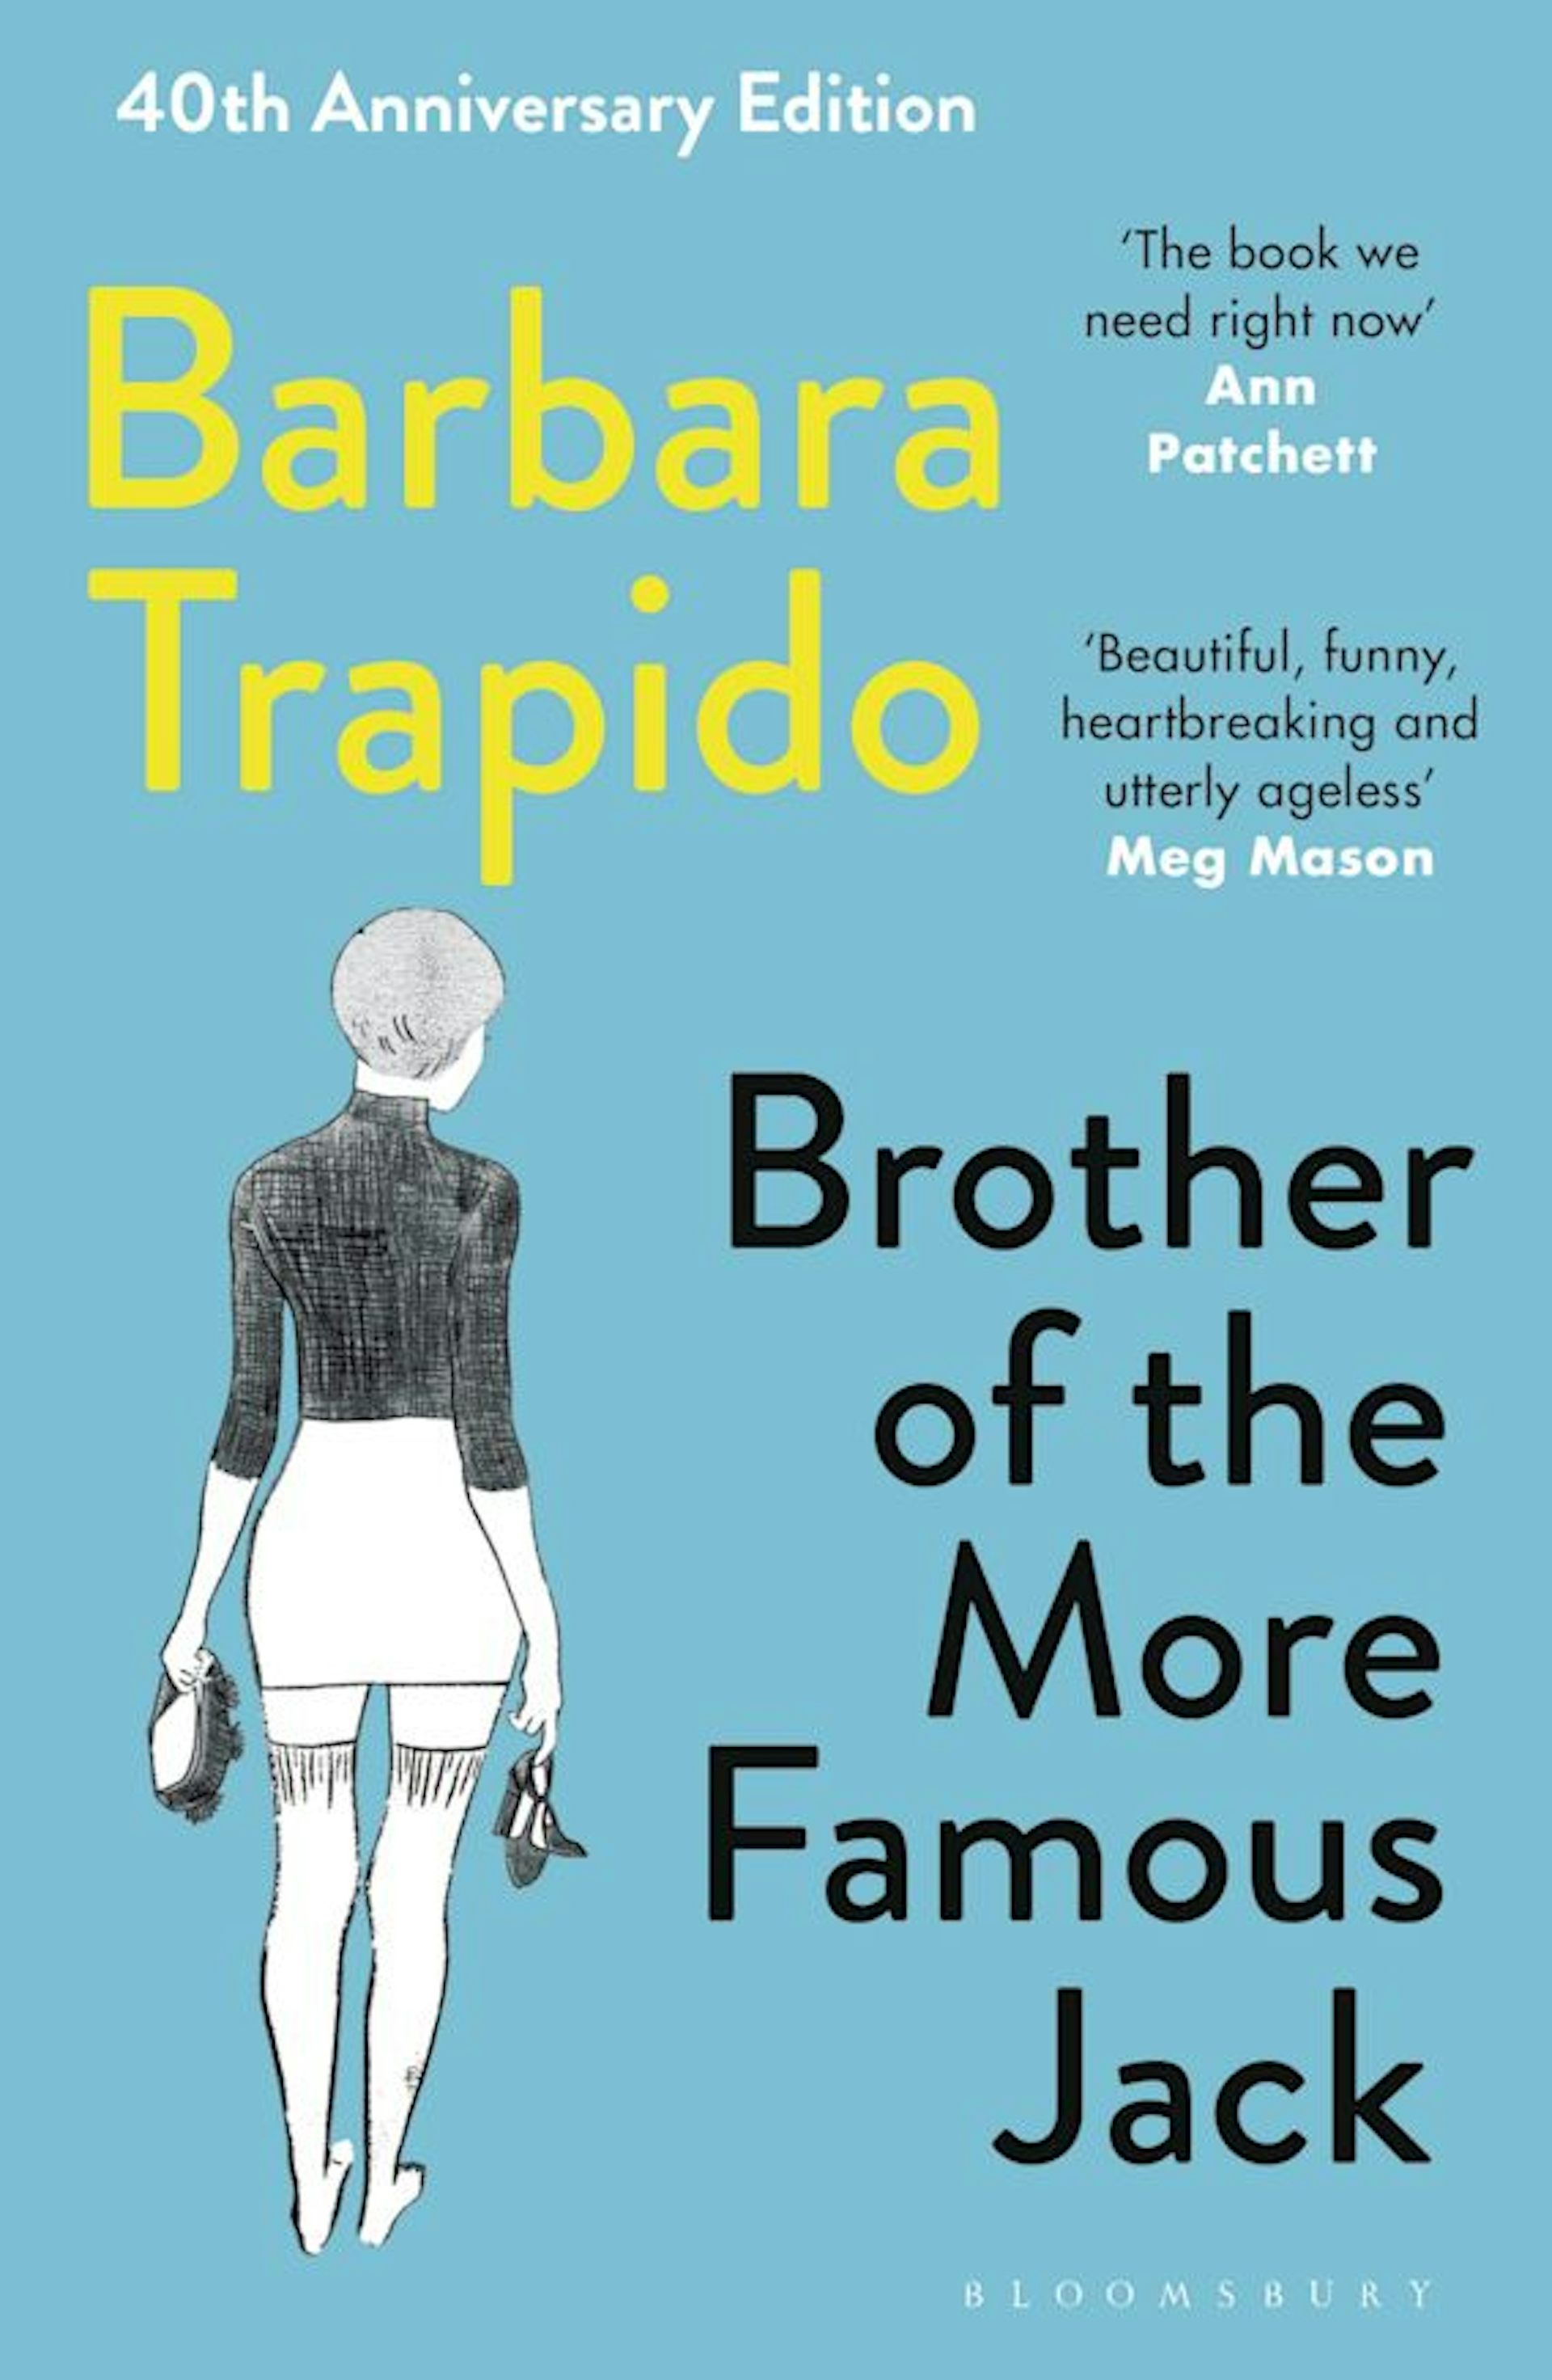 Barbara Trapidos undeniably sexy novel of academic bohemia still dazzles at 40 pic